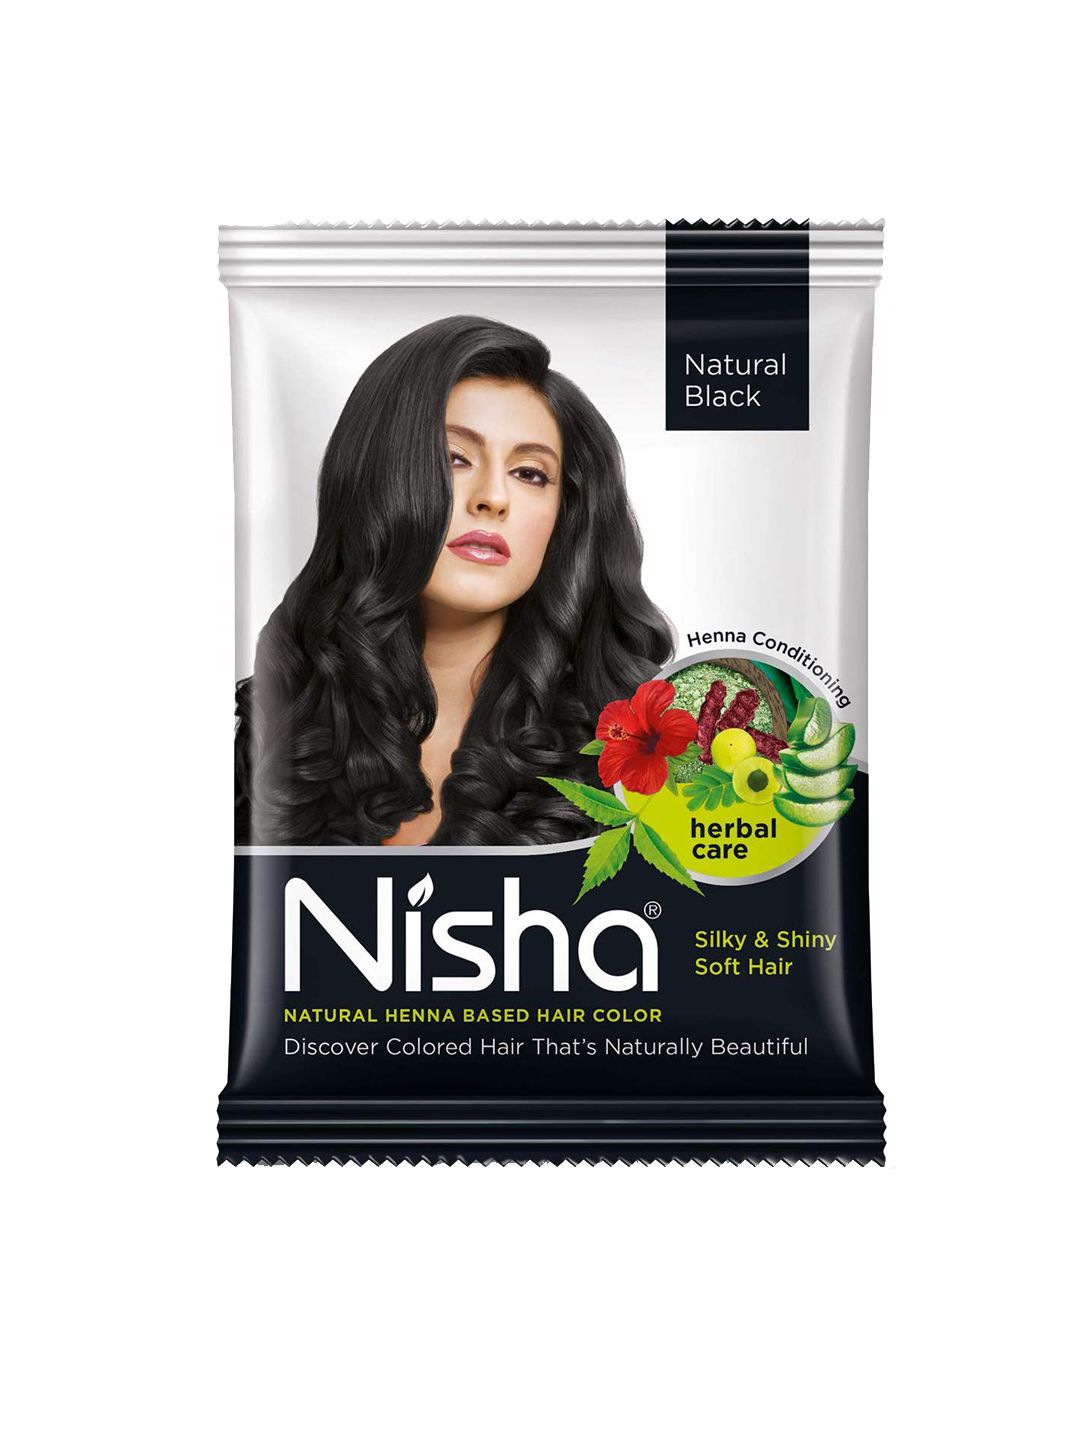 Nisha Henna Based Hair Colour 300g - Natural Black Price in India